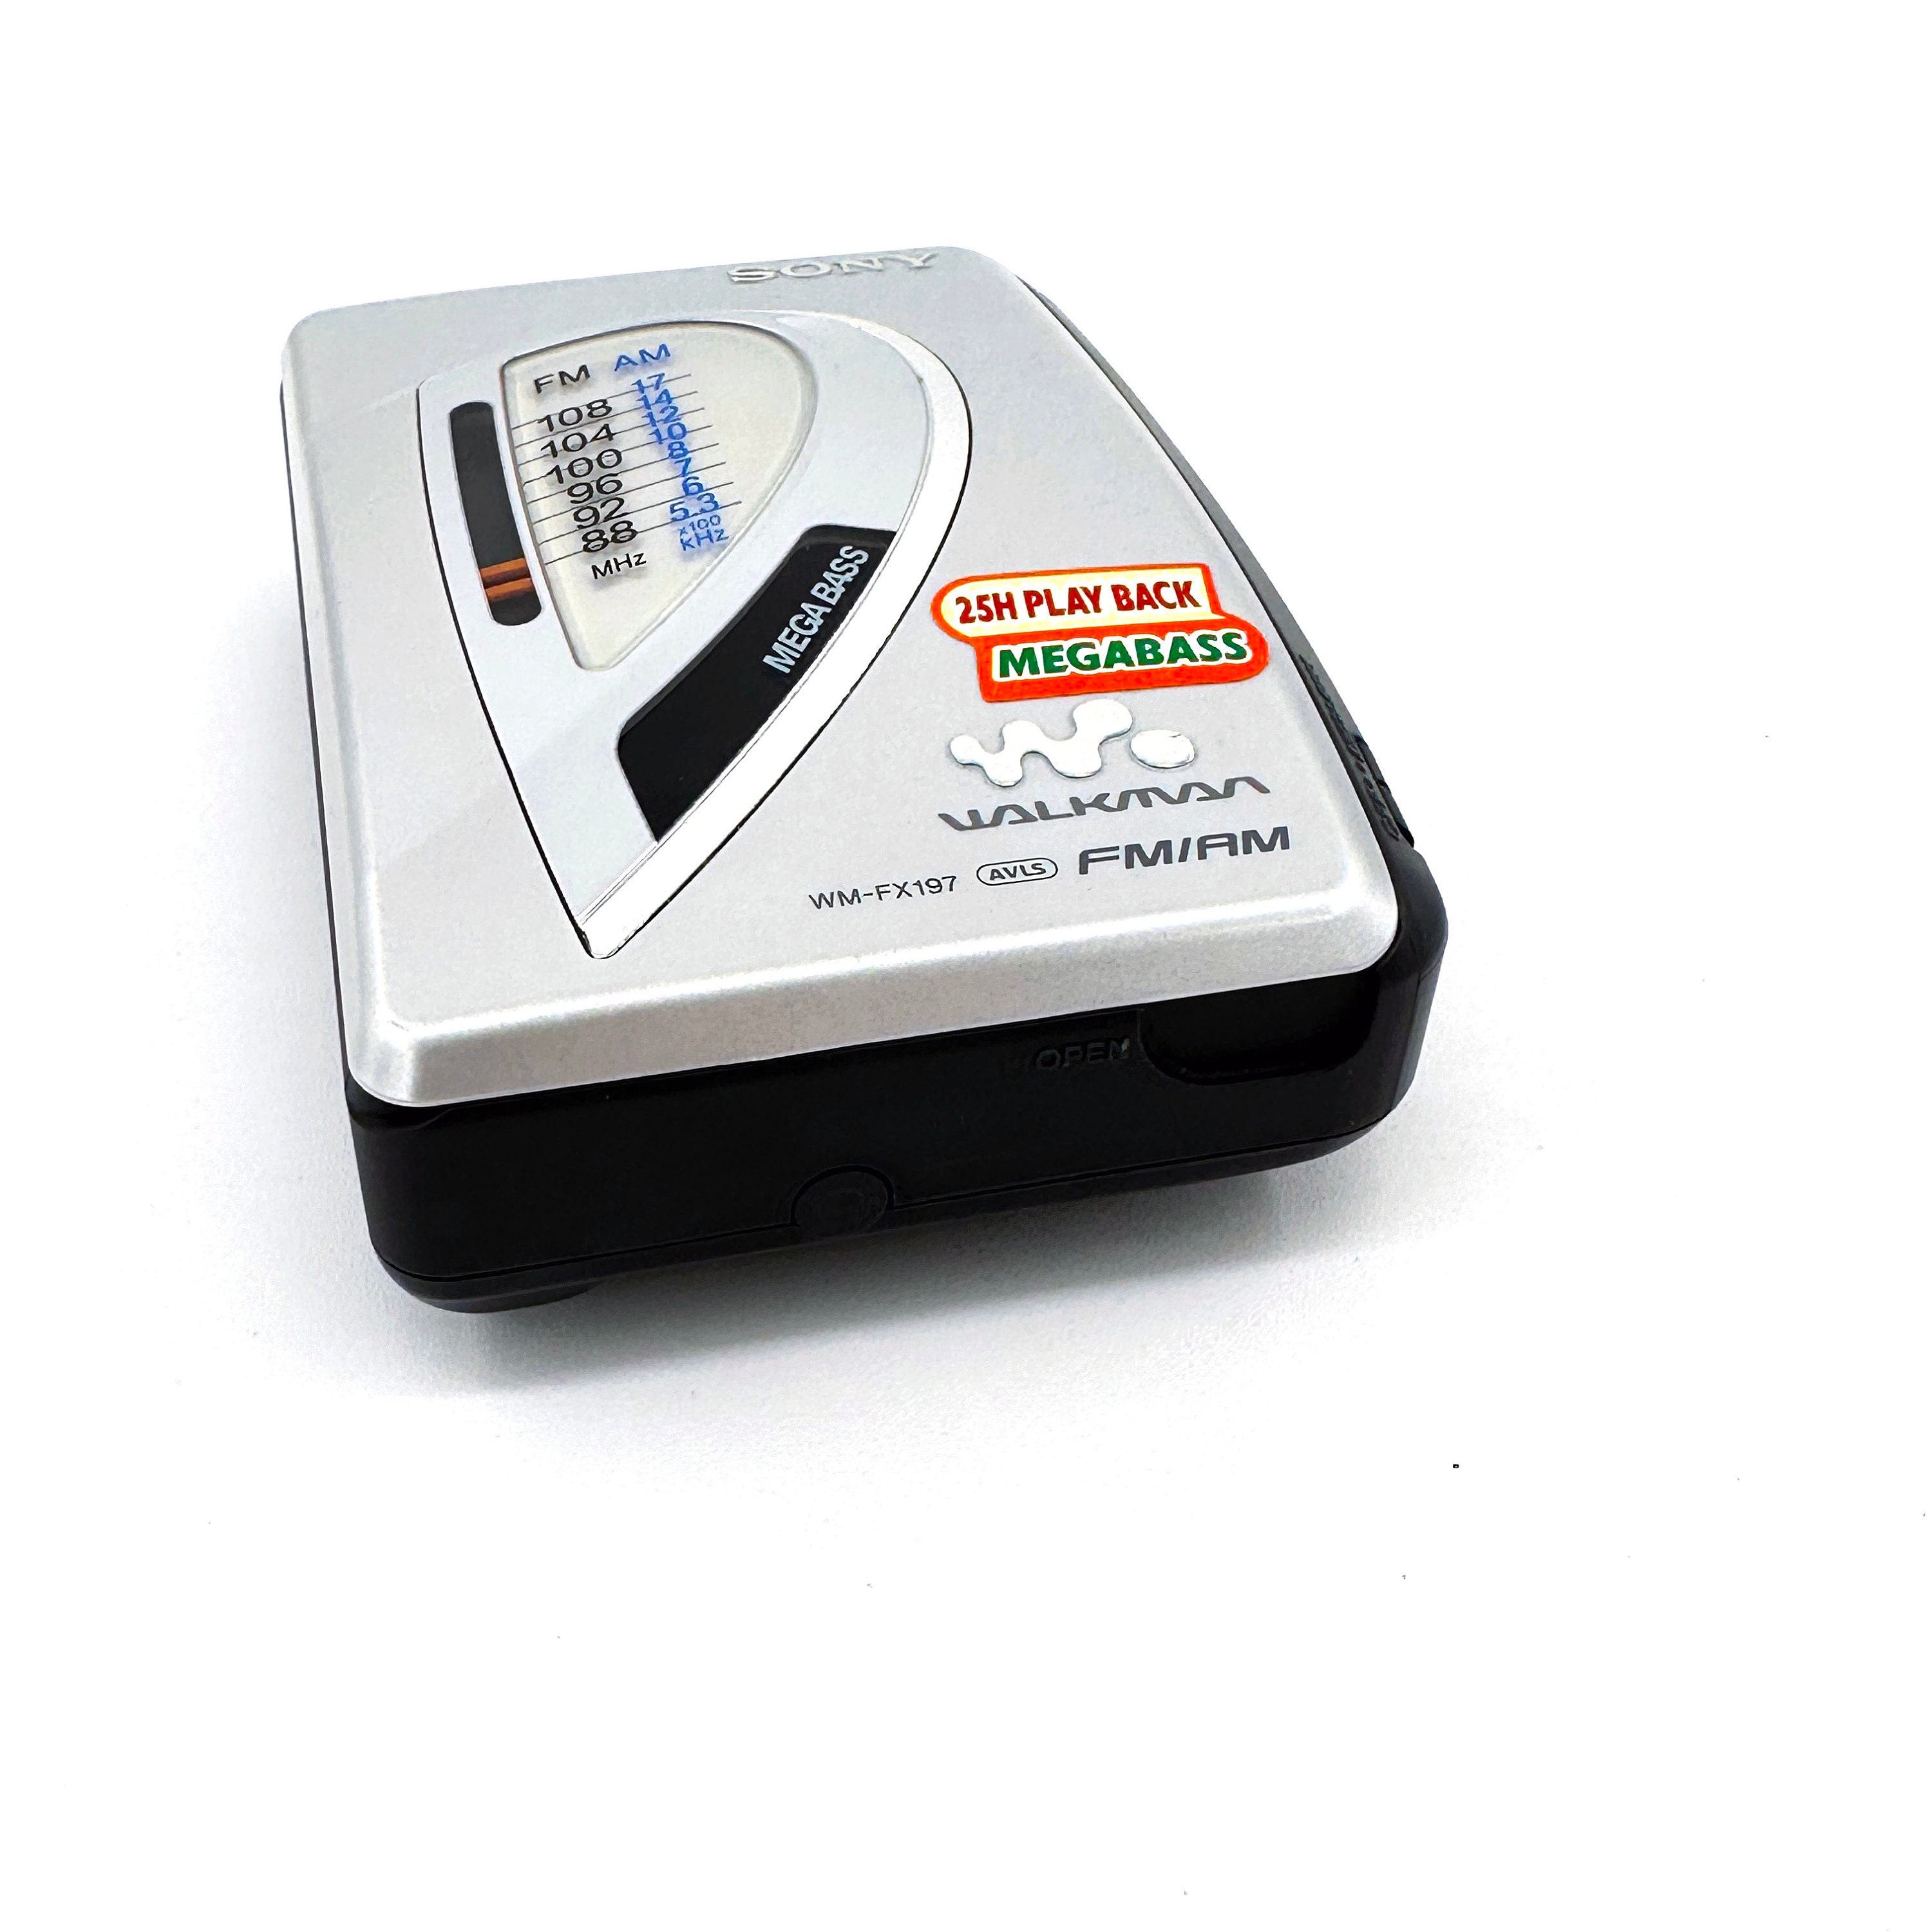 Sony WM-FX197 AM/FM Cassette Walkman